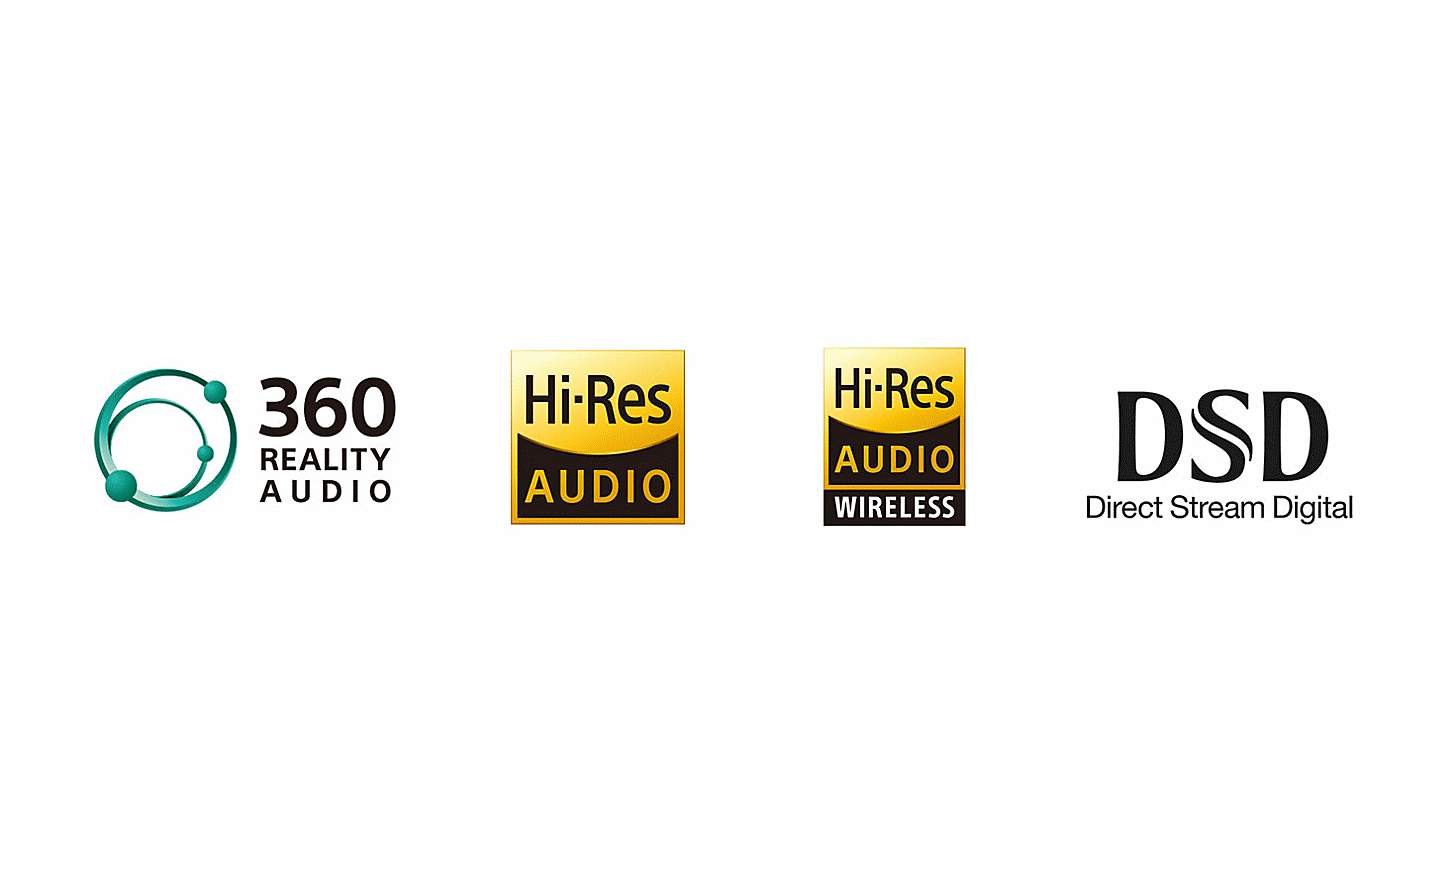 360 Reality Audio logo, Hi-Res Audio logo, Hi-Res Audio Wireless logo, DSD Direct Stream Digital logo